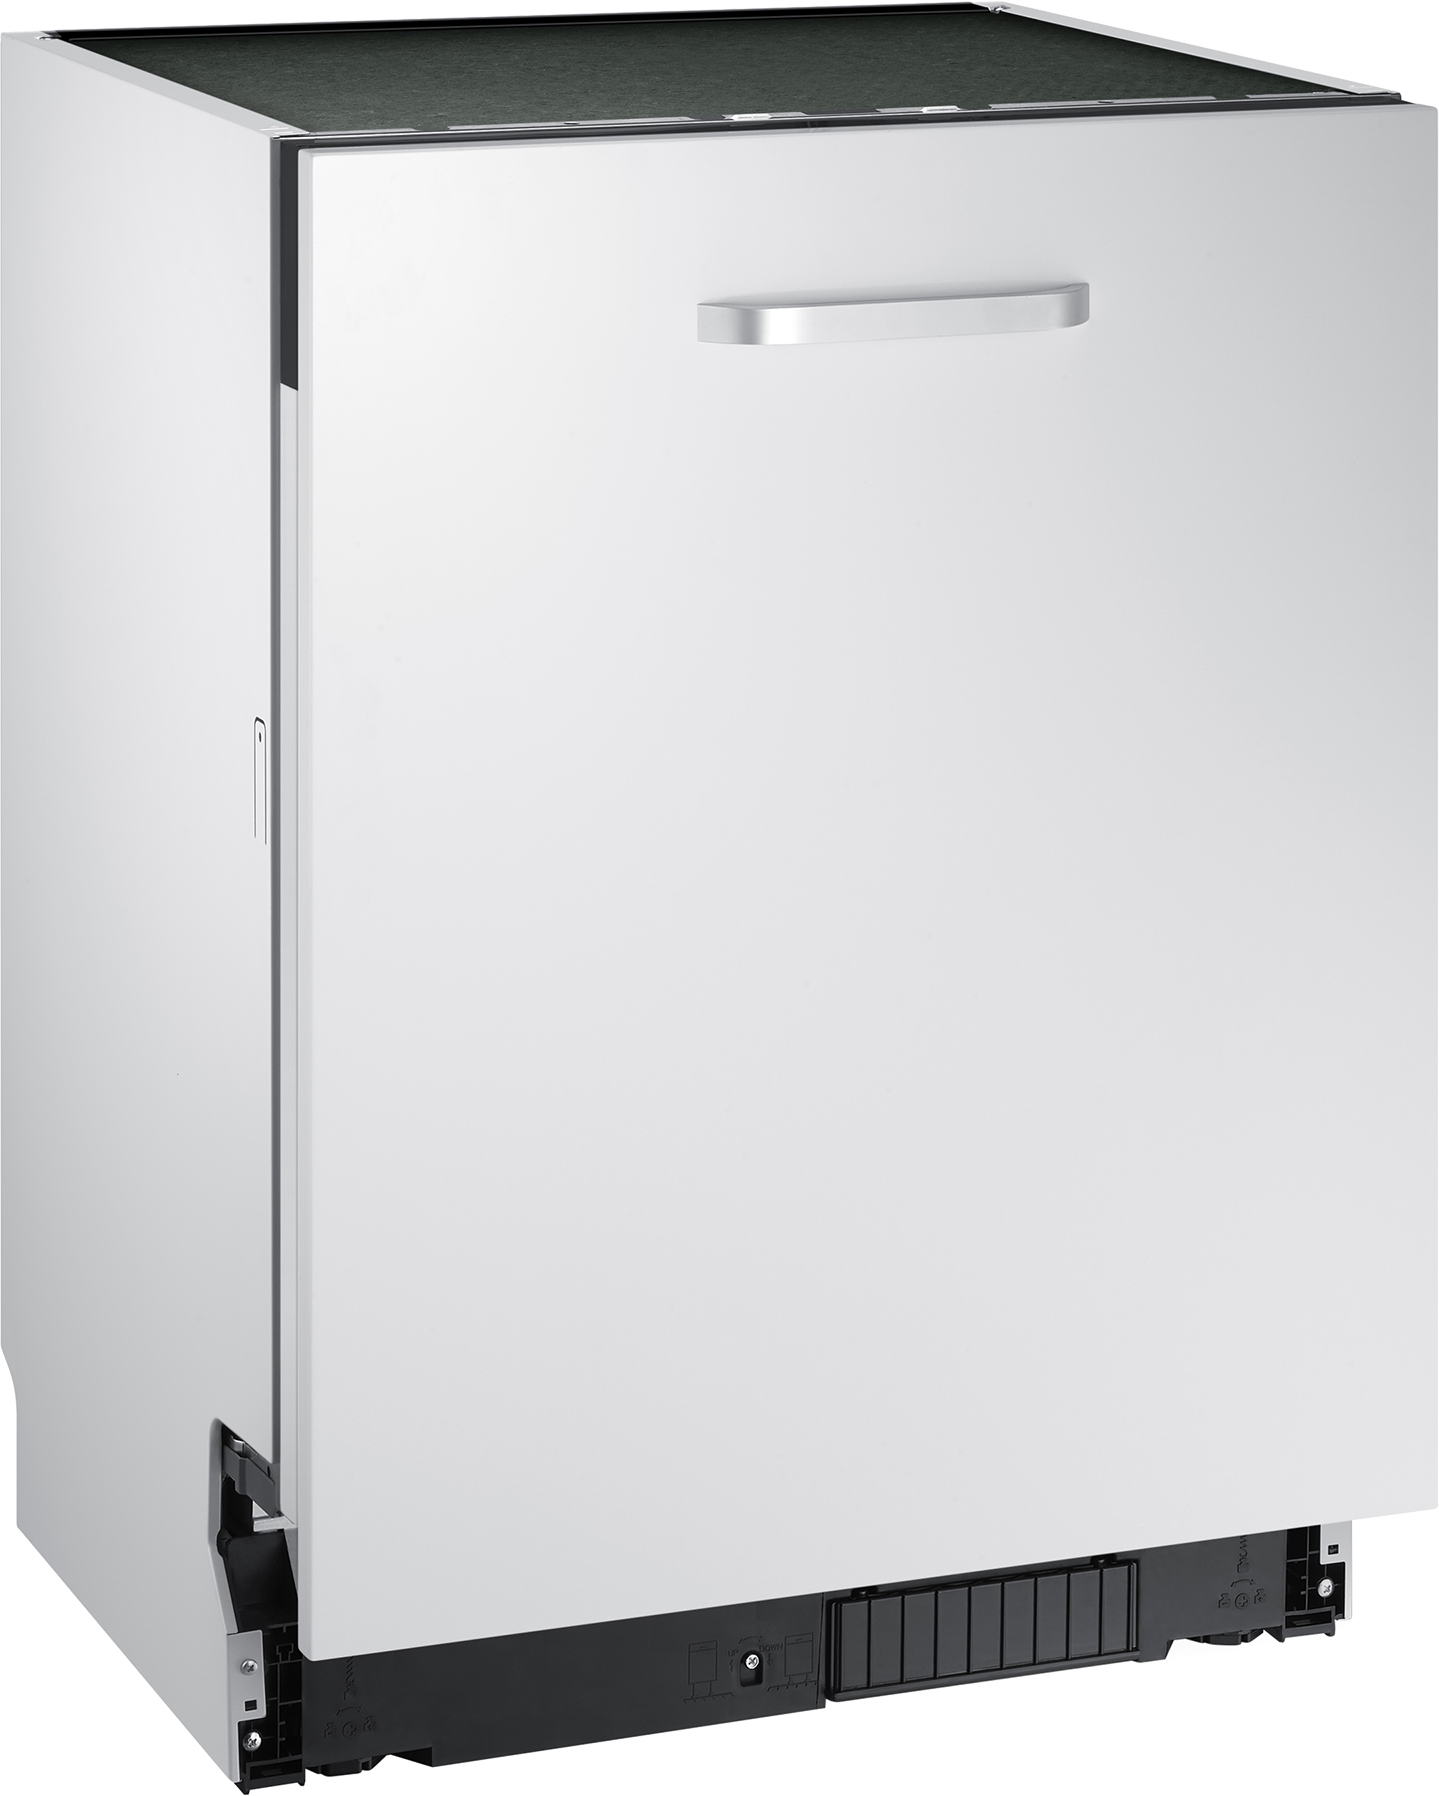 Посудомоечная машина Samsung DW60M6050BB/WT цена 18799.00 грн - фотография 2